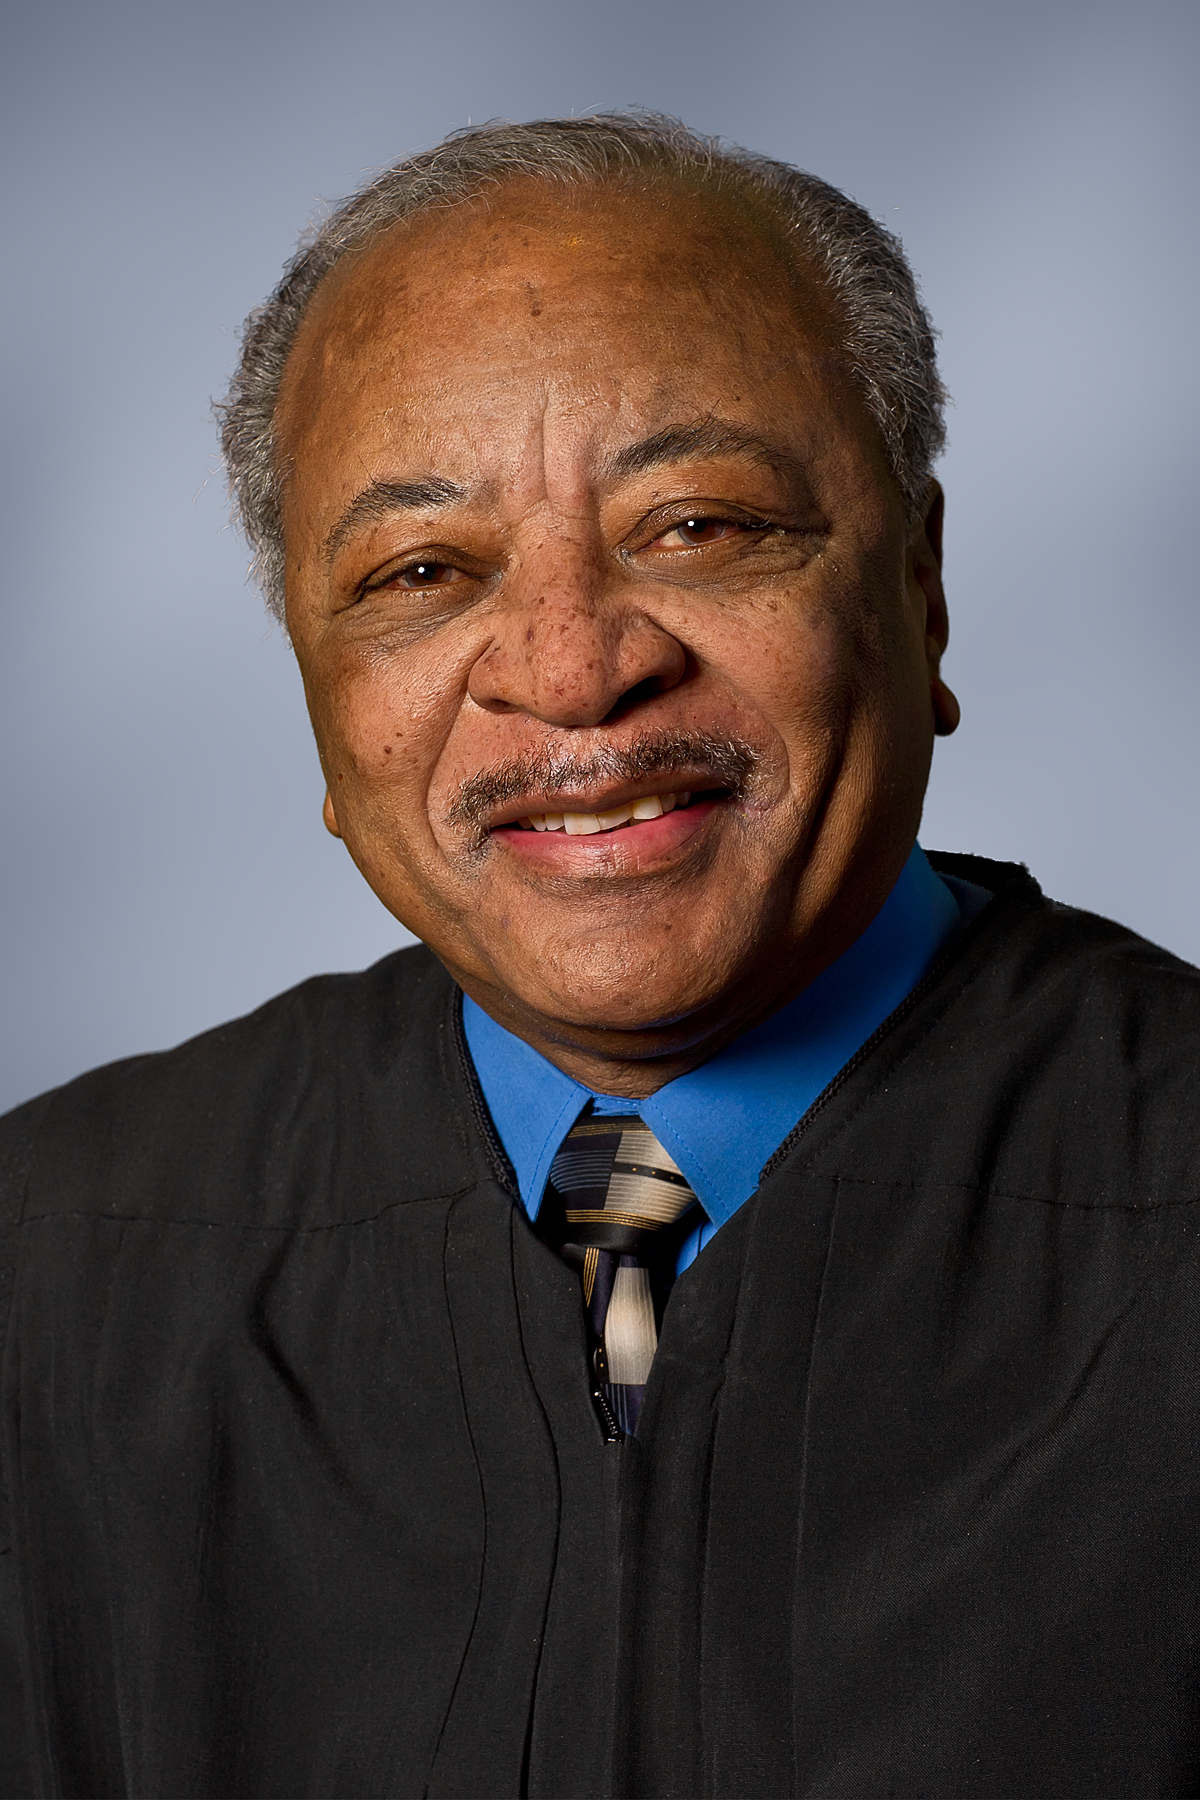 Headshot of Judge Bonner, smiling in a judicial robe